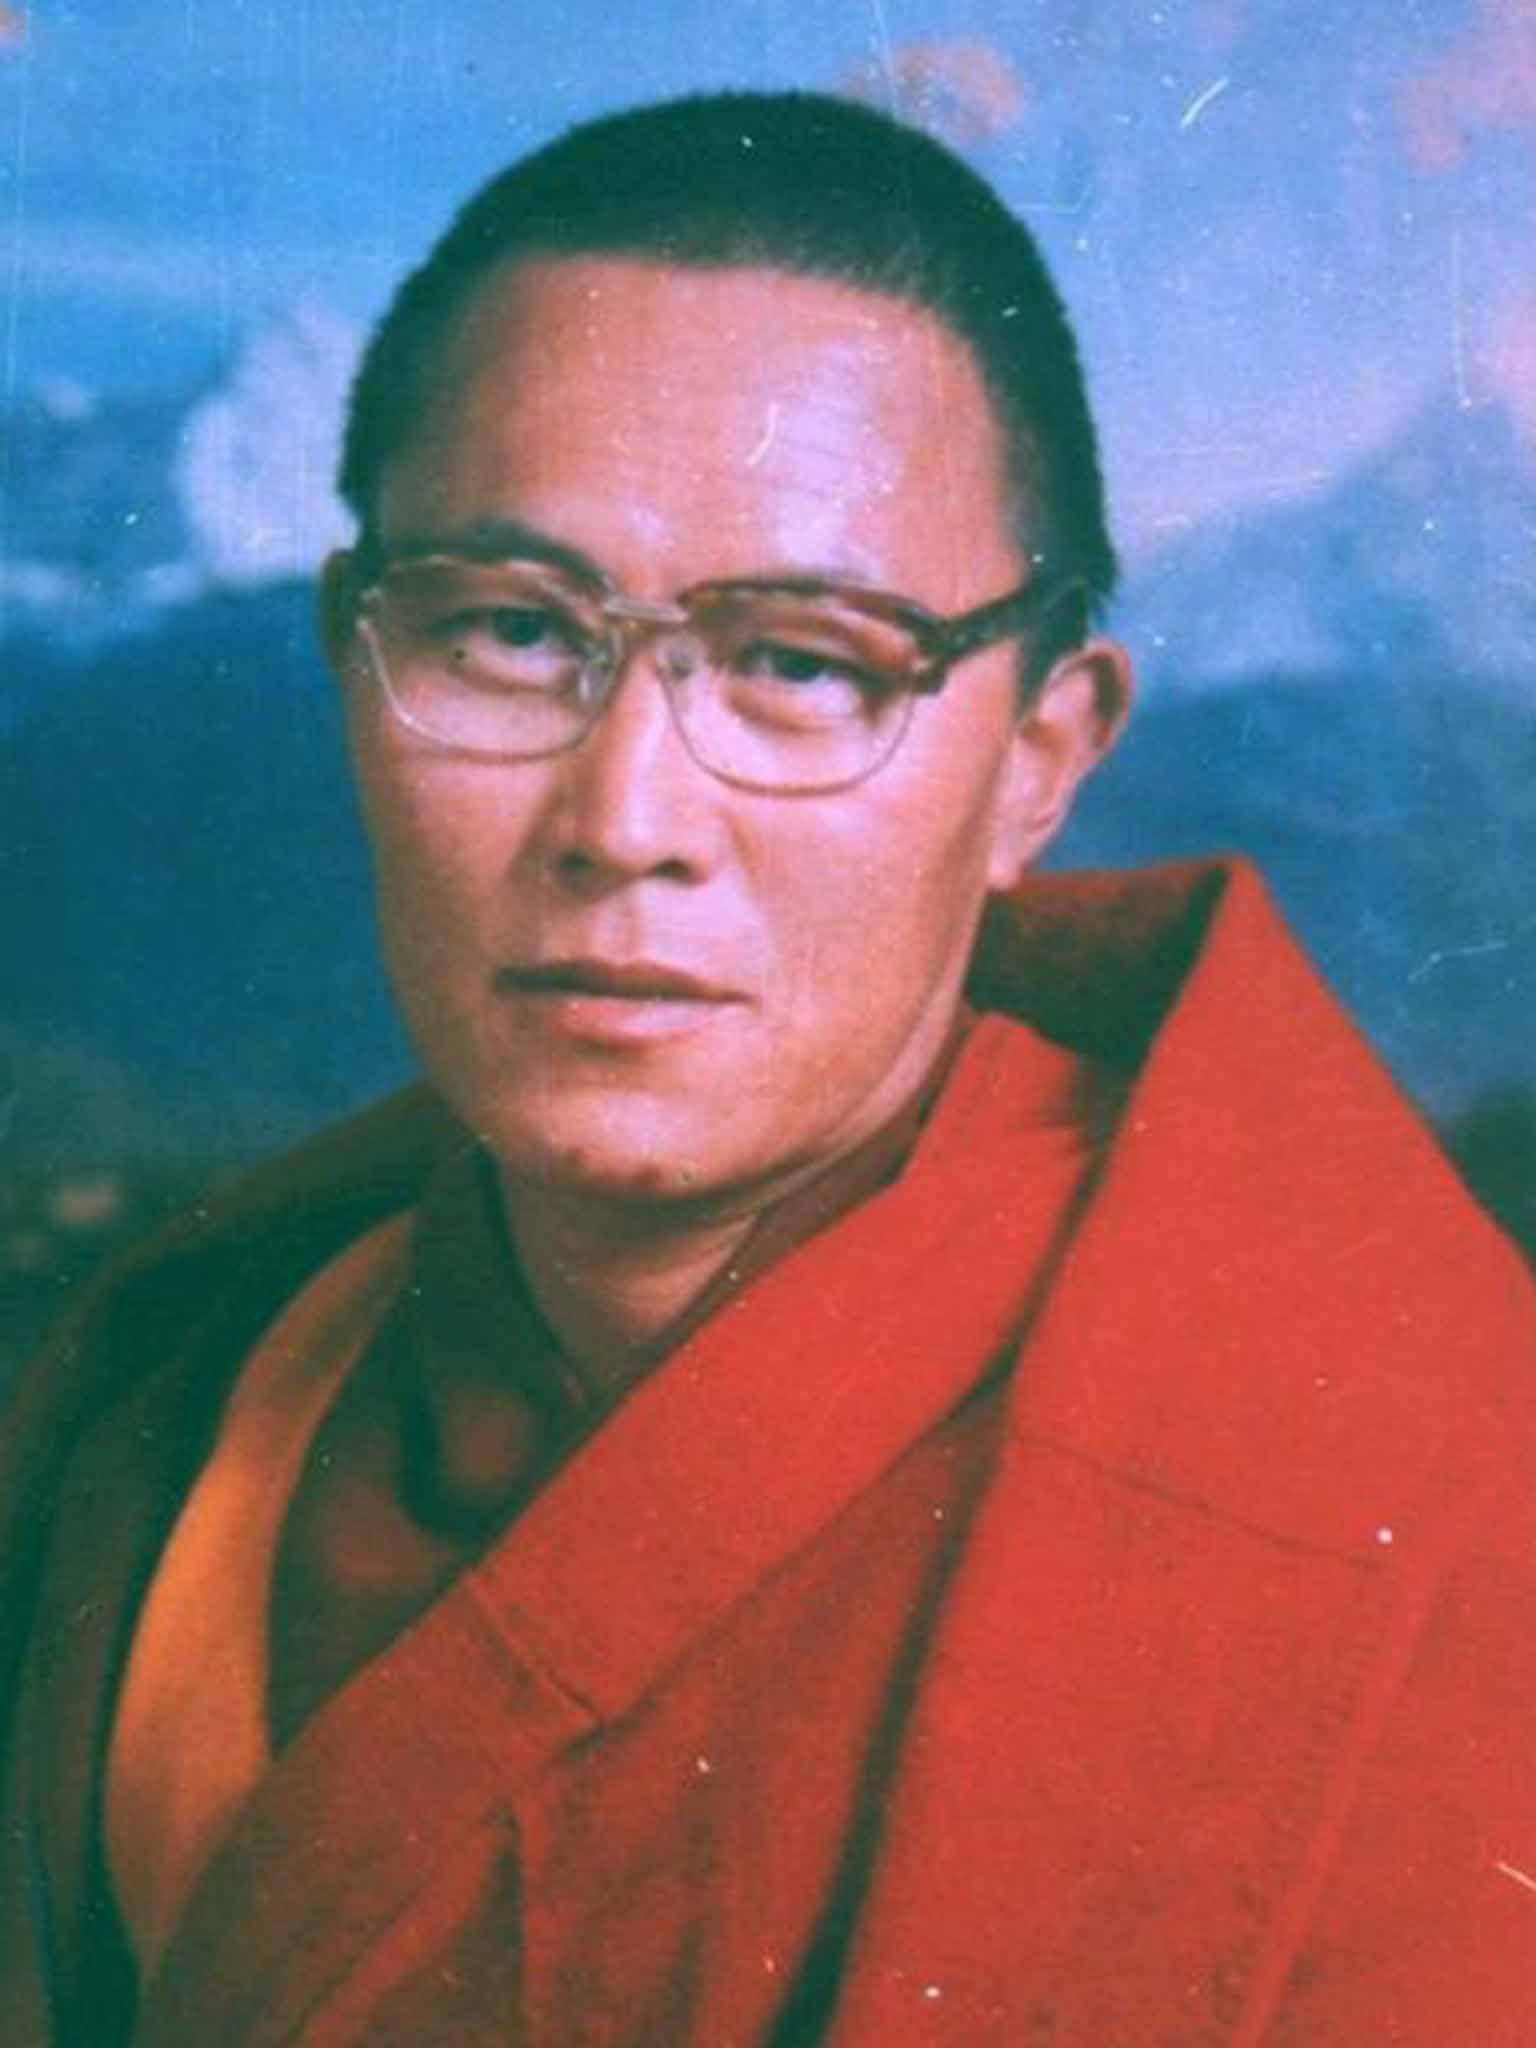 Tenzin Delek: he was recognised by the Dalai Lama as a tulku, or reincarnated lama